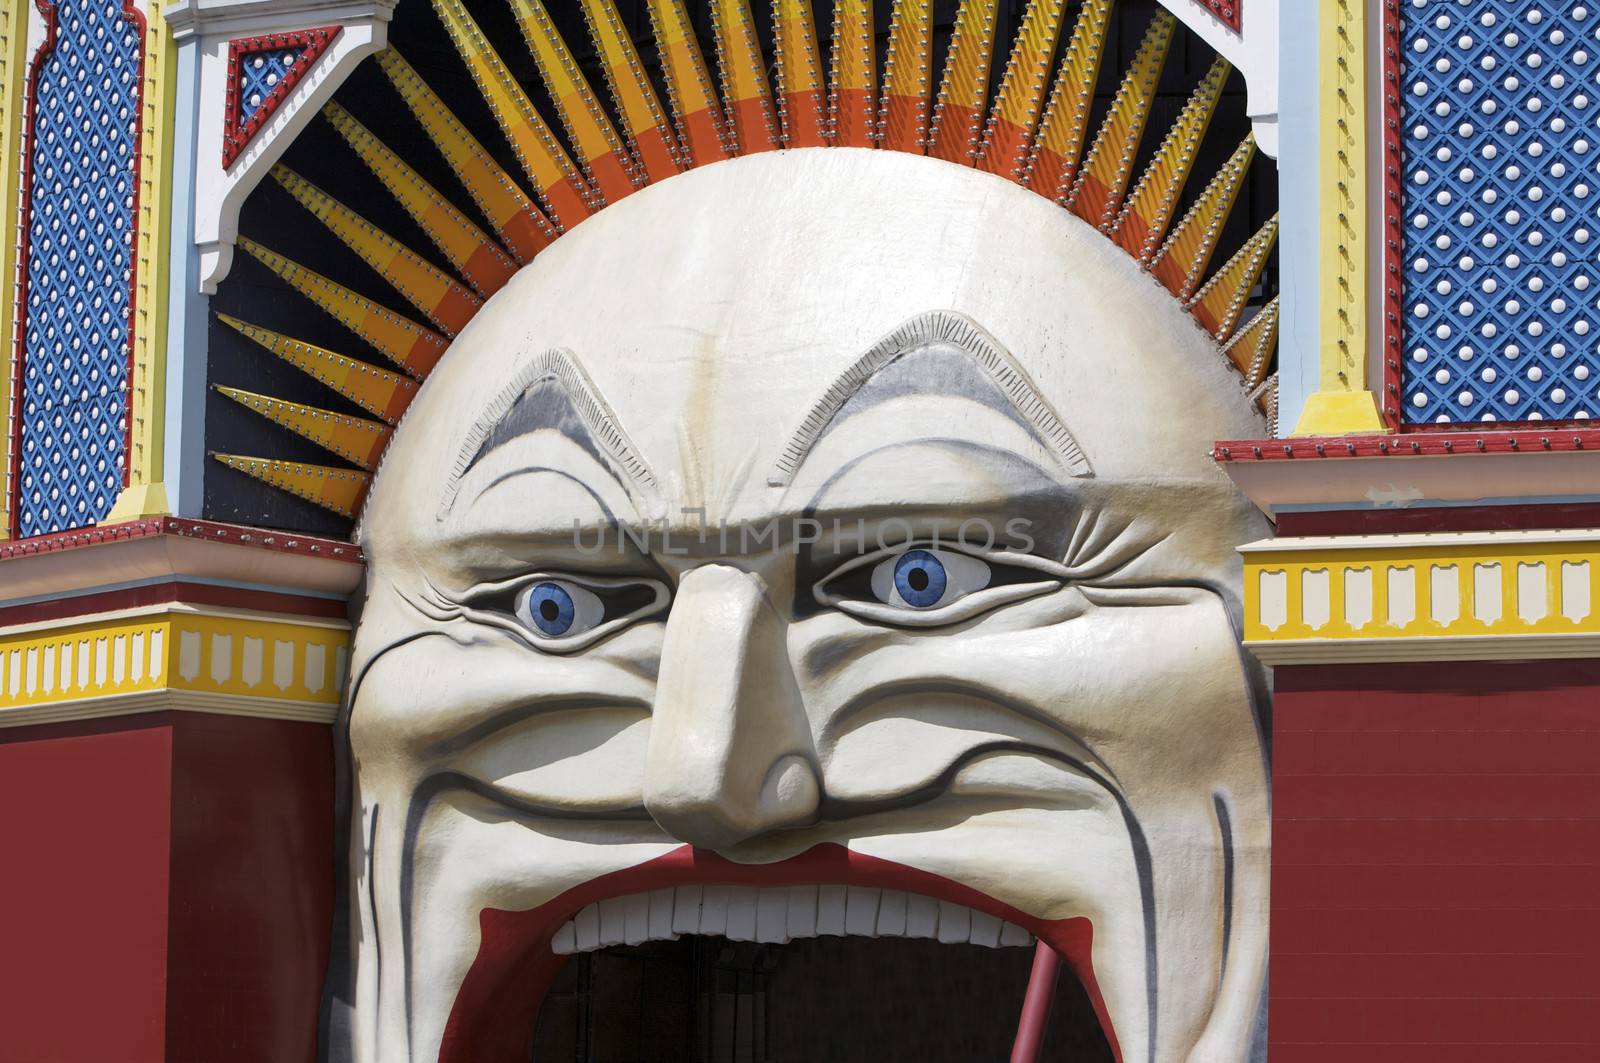 Clown face, Luna Park by instinia